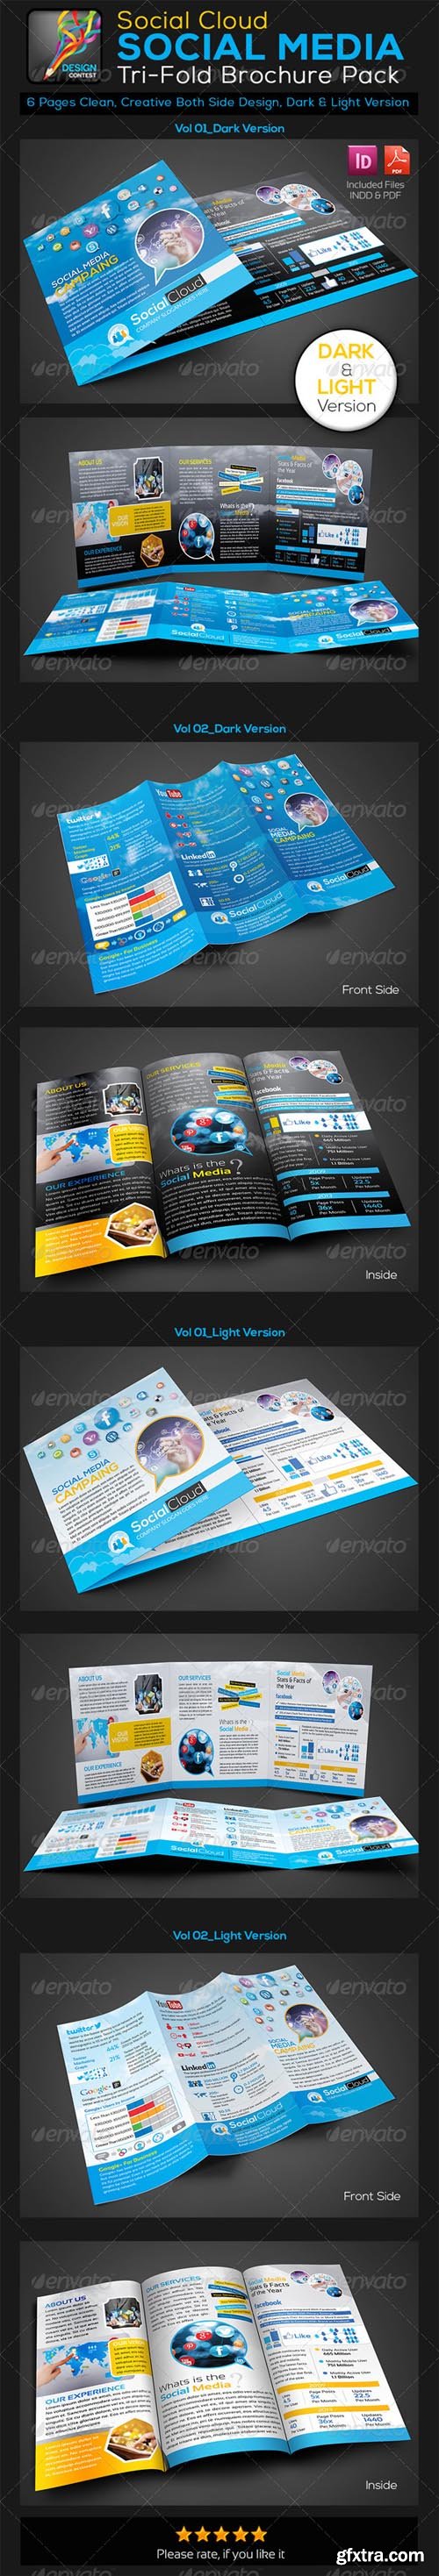 GR - Social Media Tri-fold Business Brochure 5744378